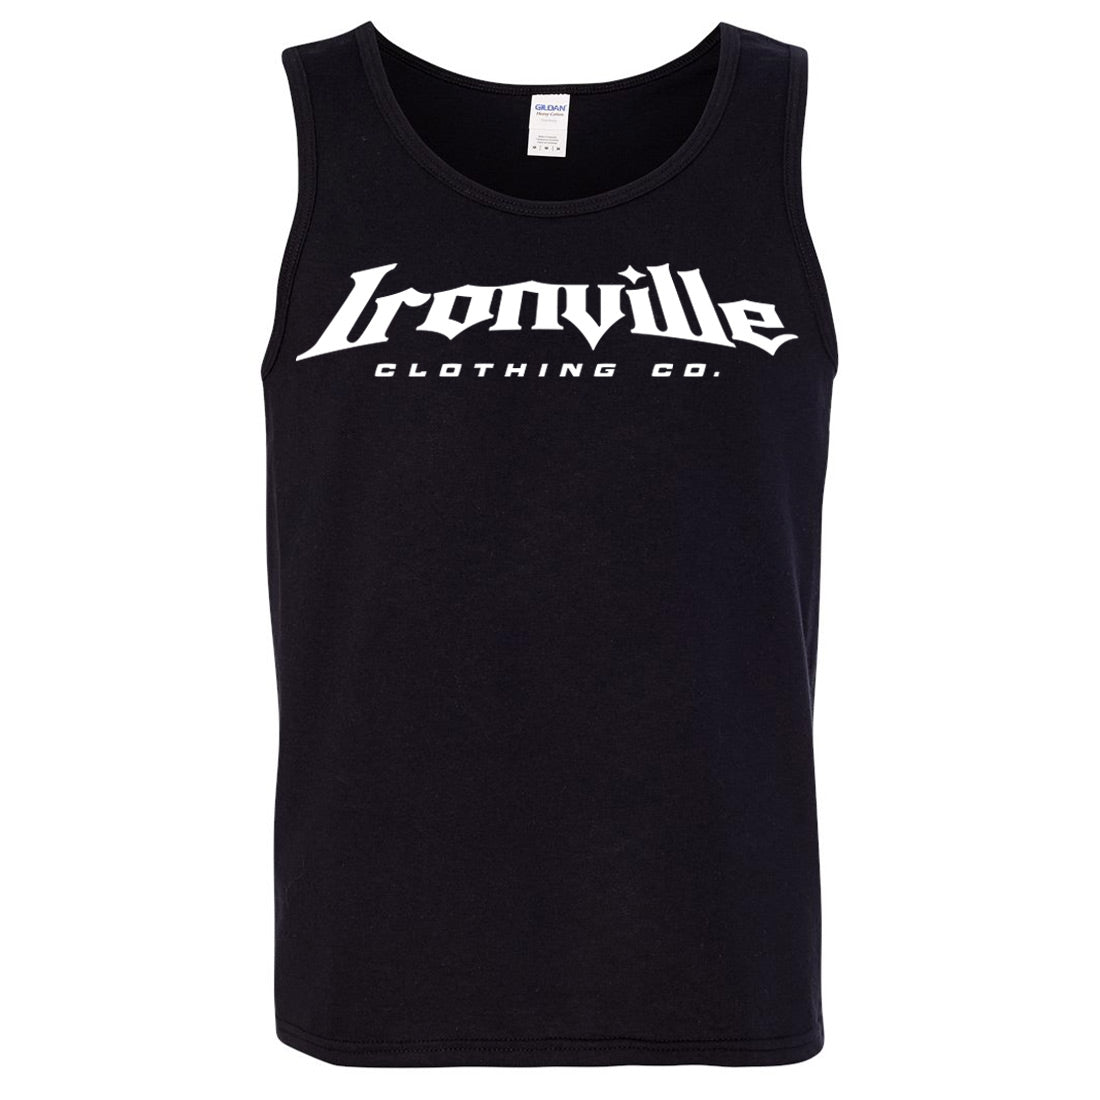 Ironville BARBELL PITBULL Standard Cut Gym Tank Top